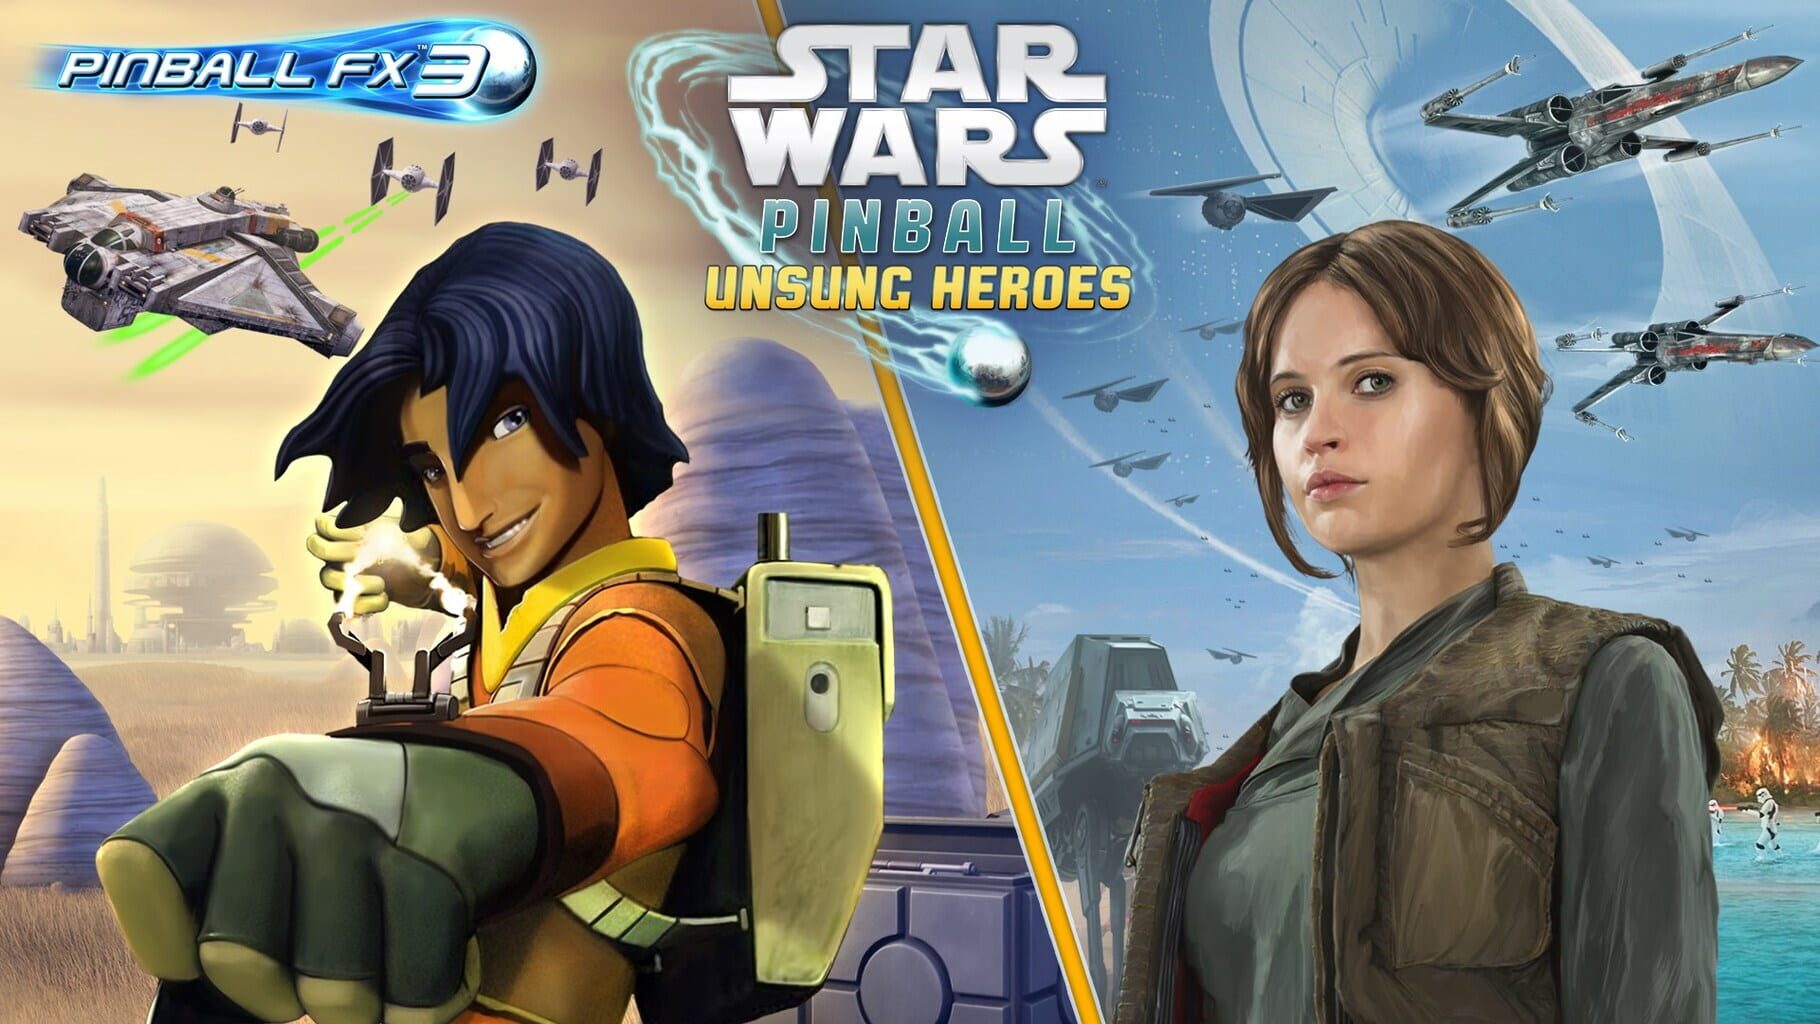 Arte - Pinball FX3: Star Wars Pinball - Unsung Heroes